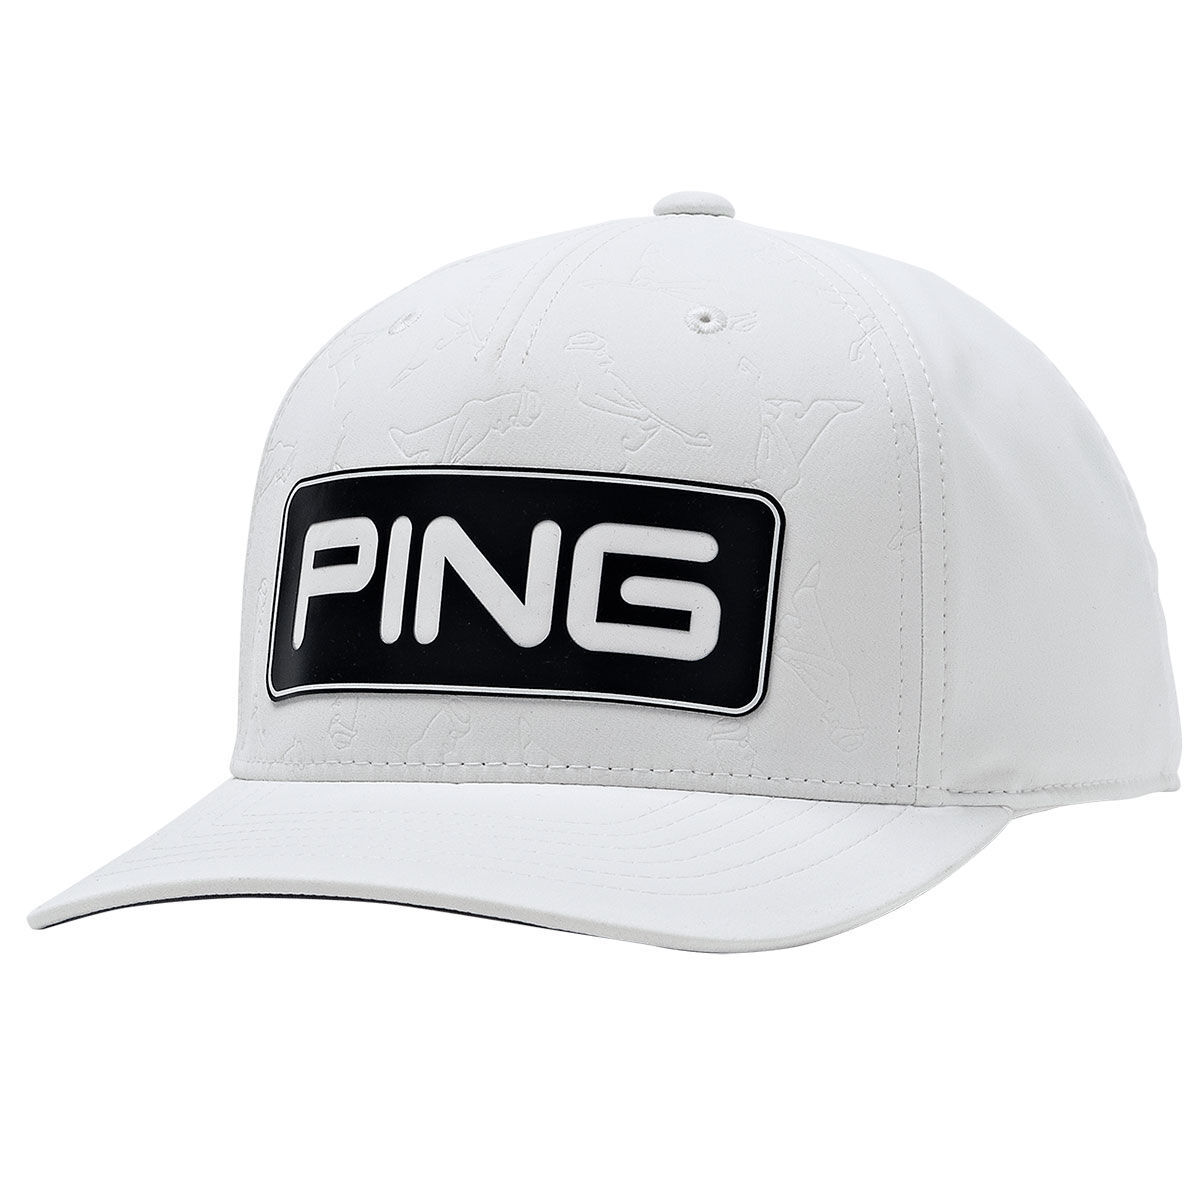 Image of PING Mr Ping Tour Snapback Kappe Herren White | Online Golf